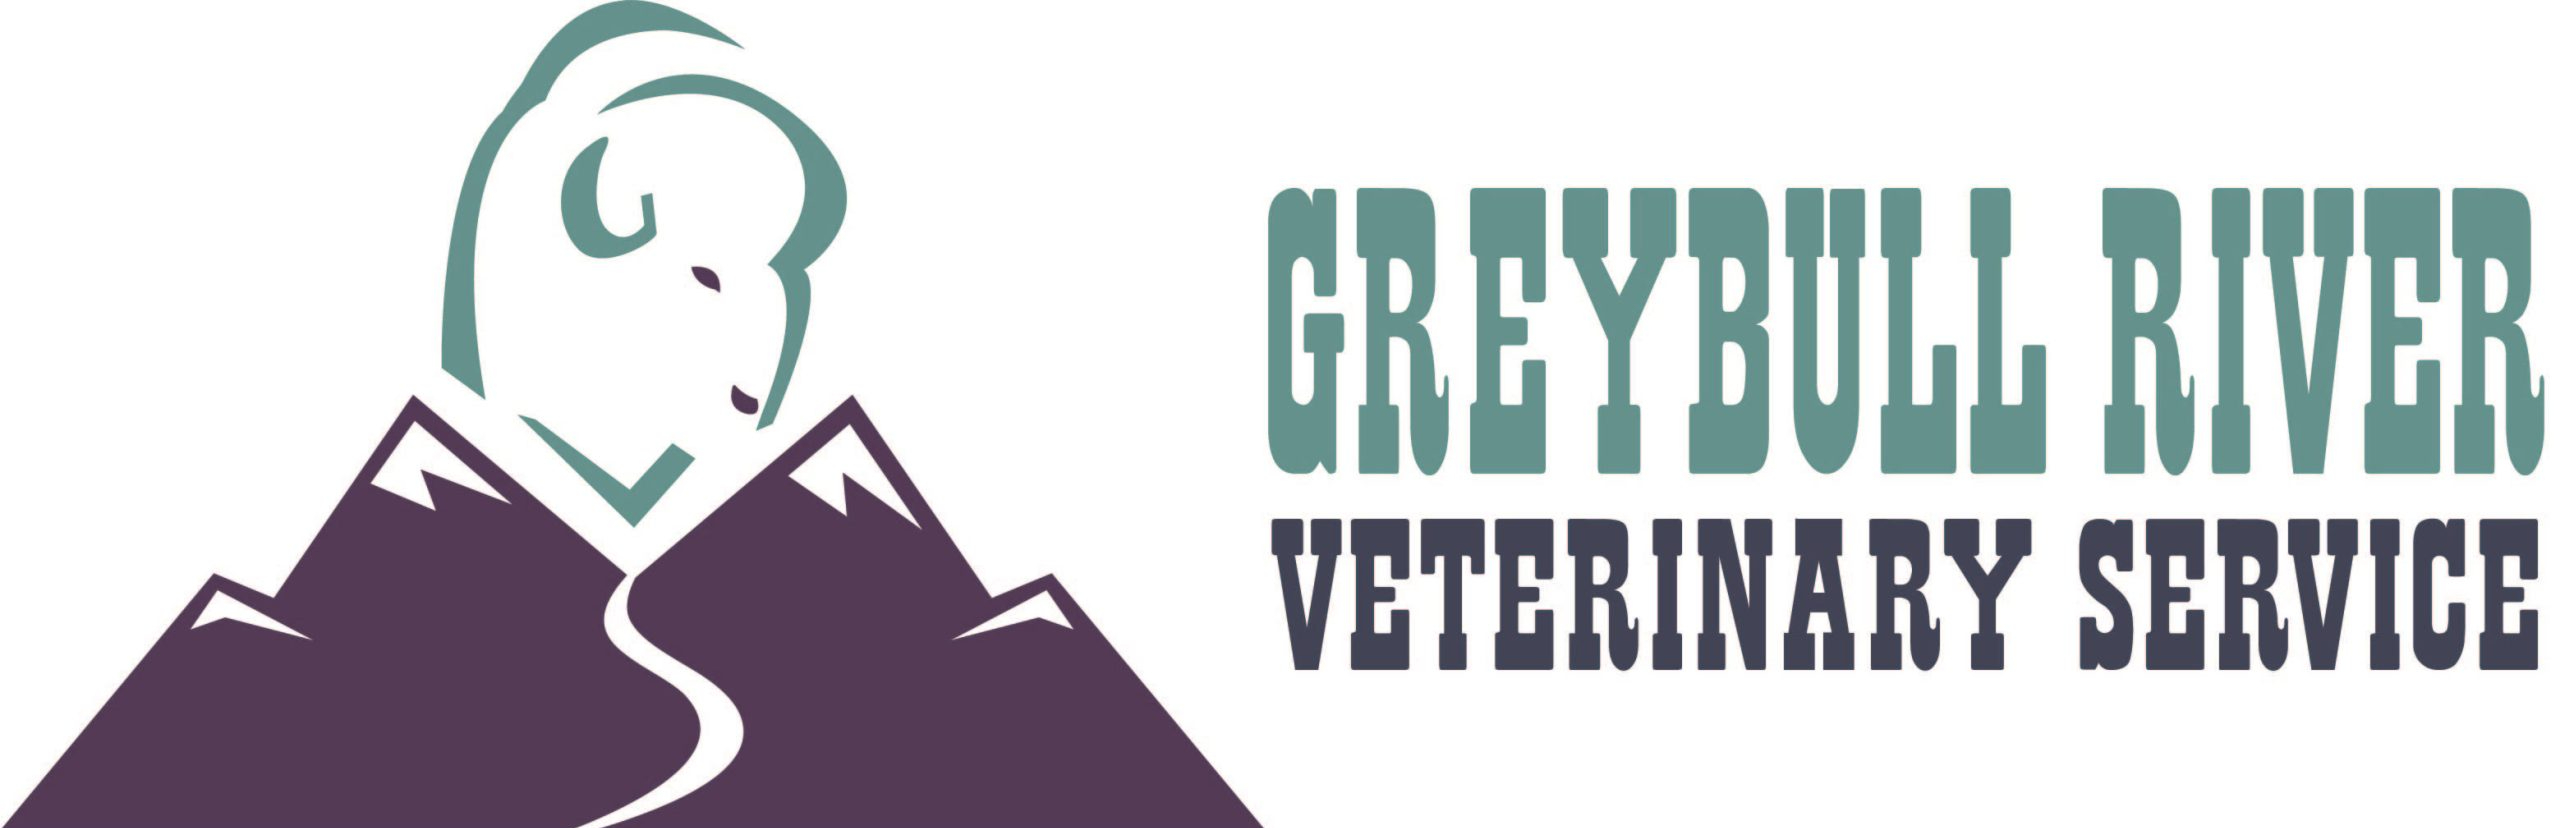 Greybull River Veterinary Service